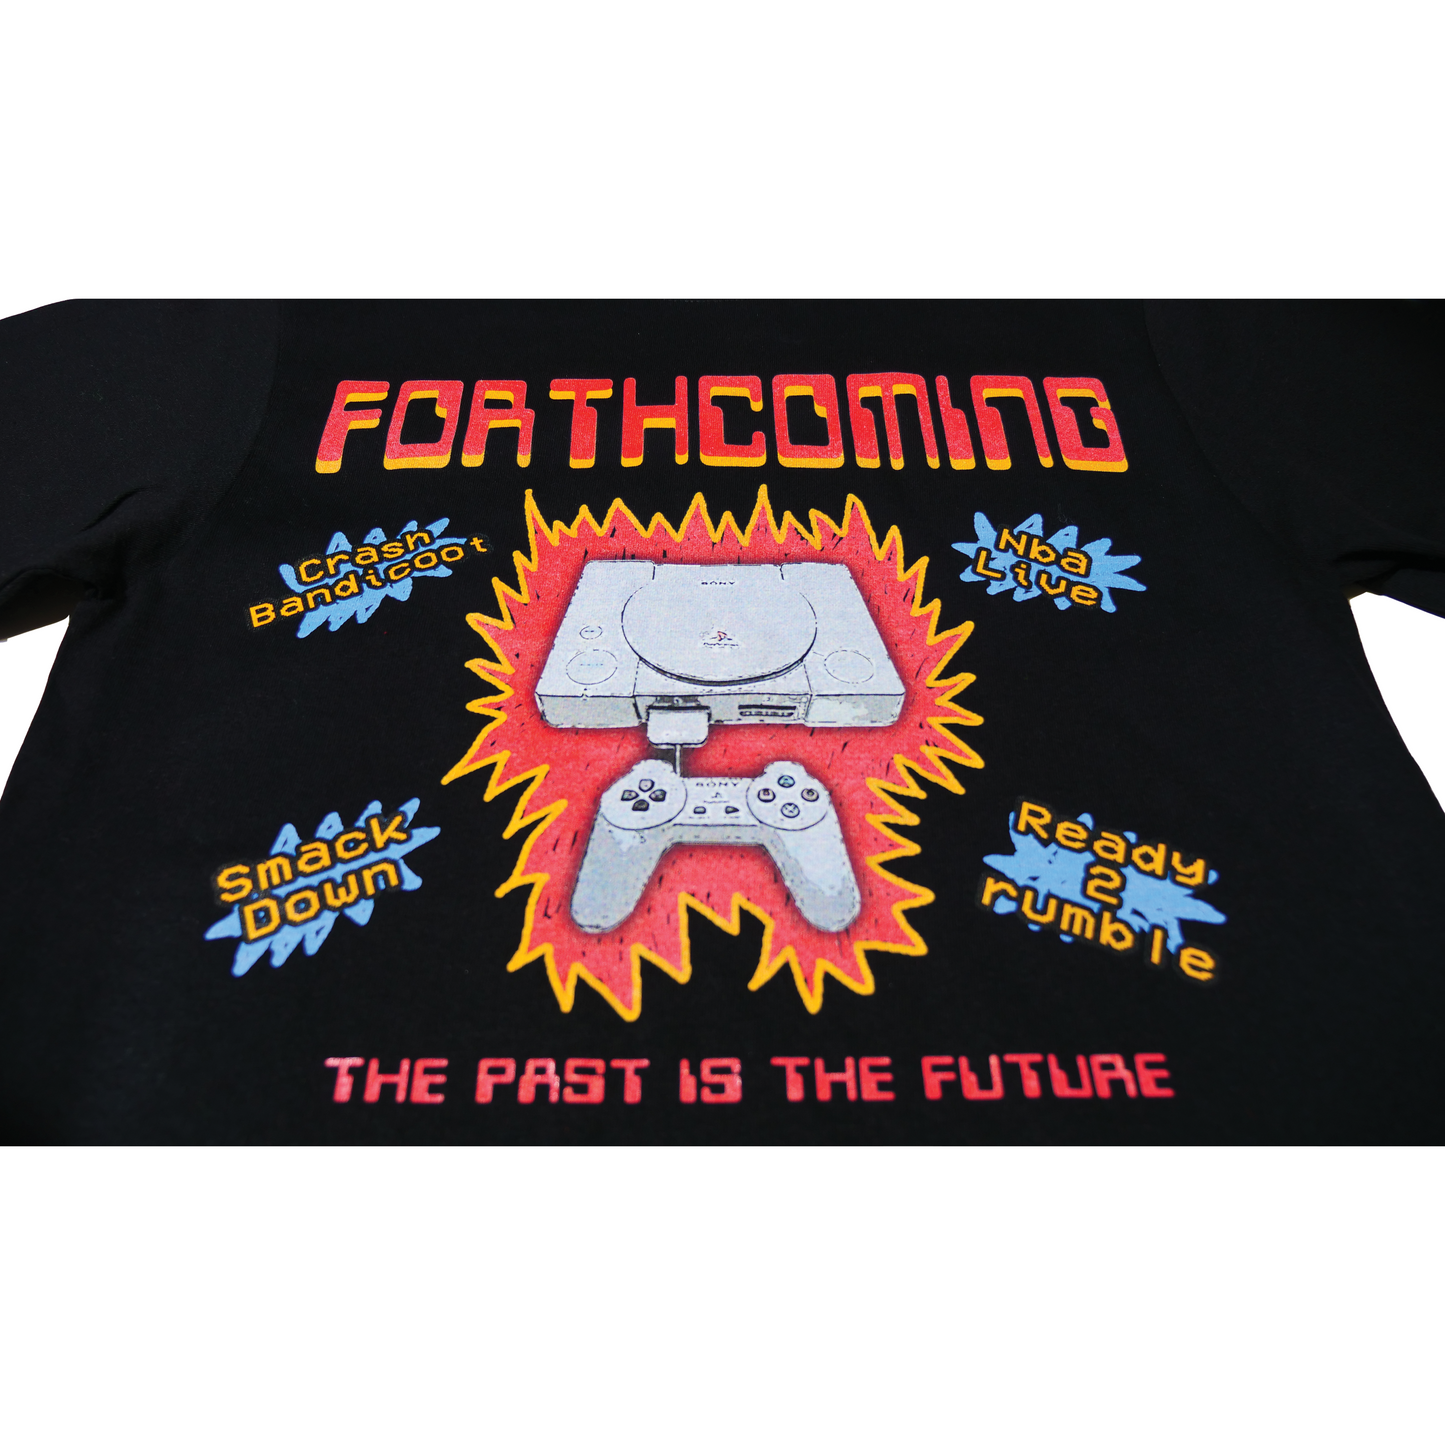 Forthcoming “PS1” T shirt